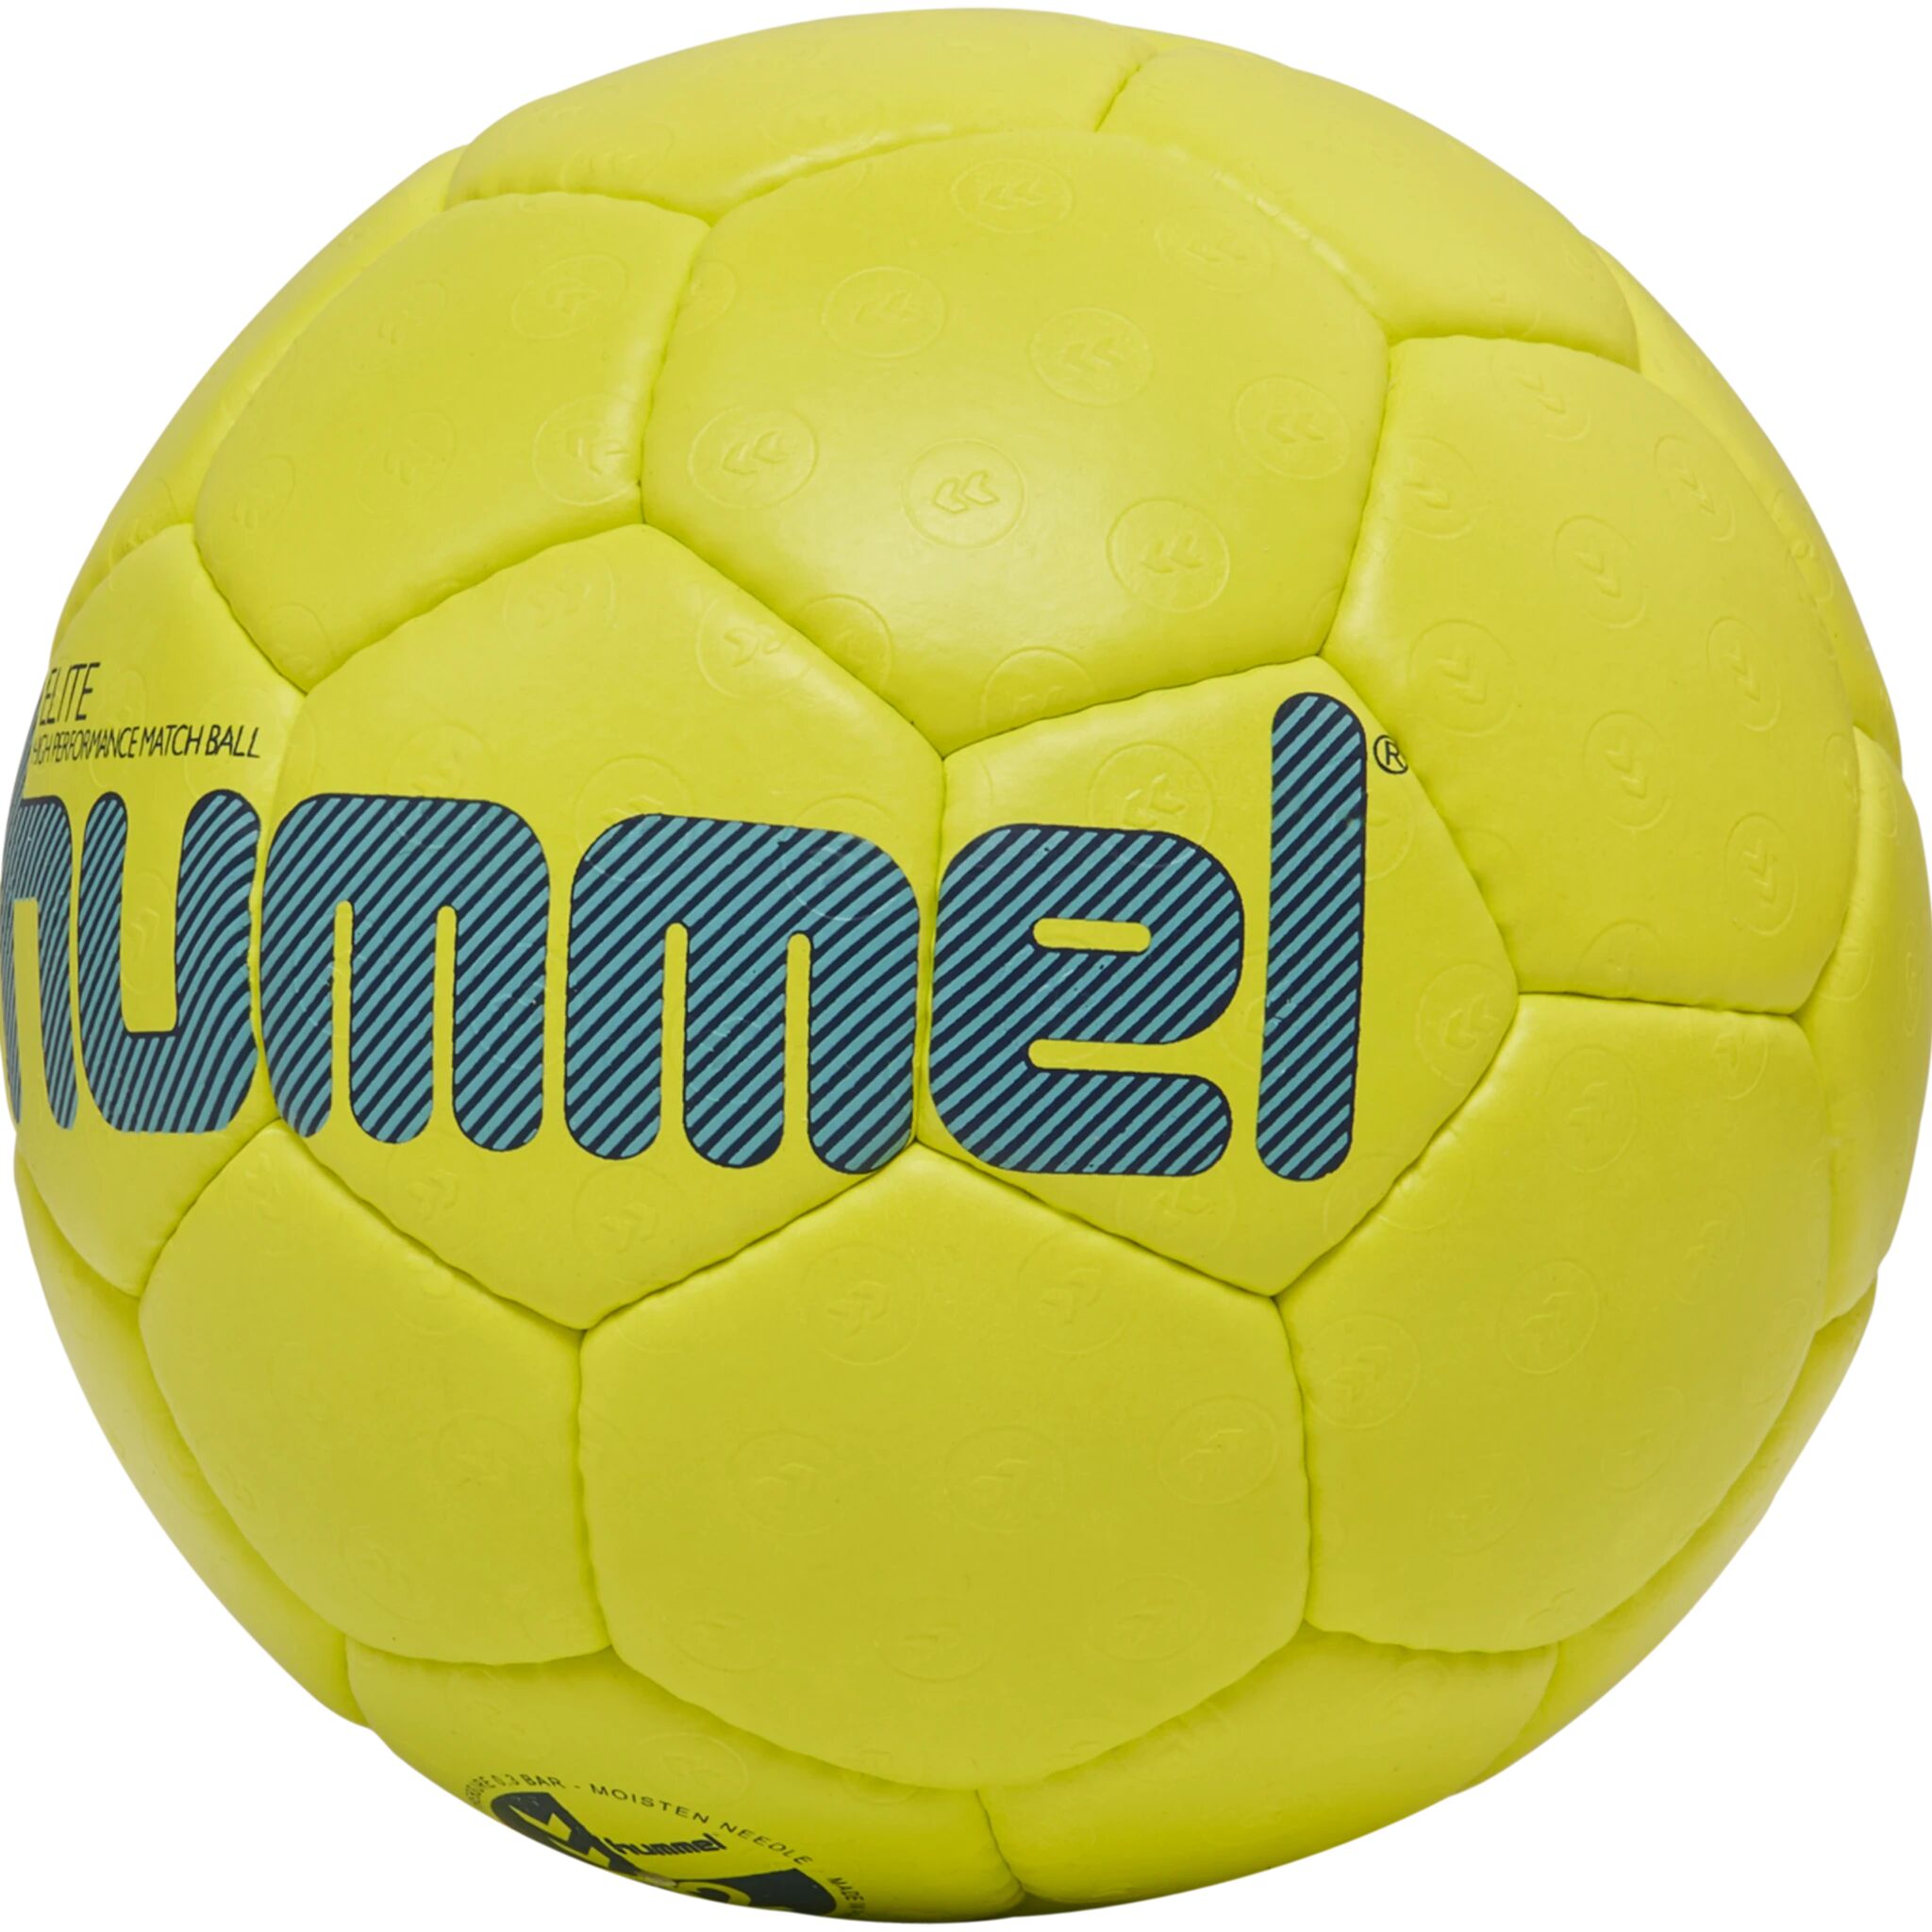 Hummel Hmlelite, håndball senior 3 Safety Yellow/turquo